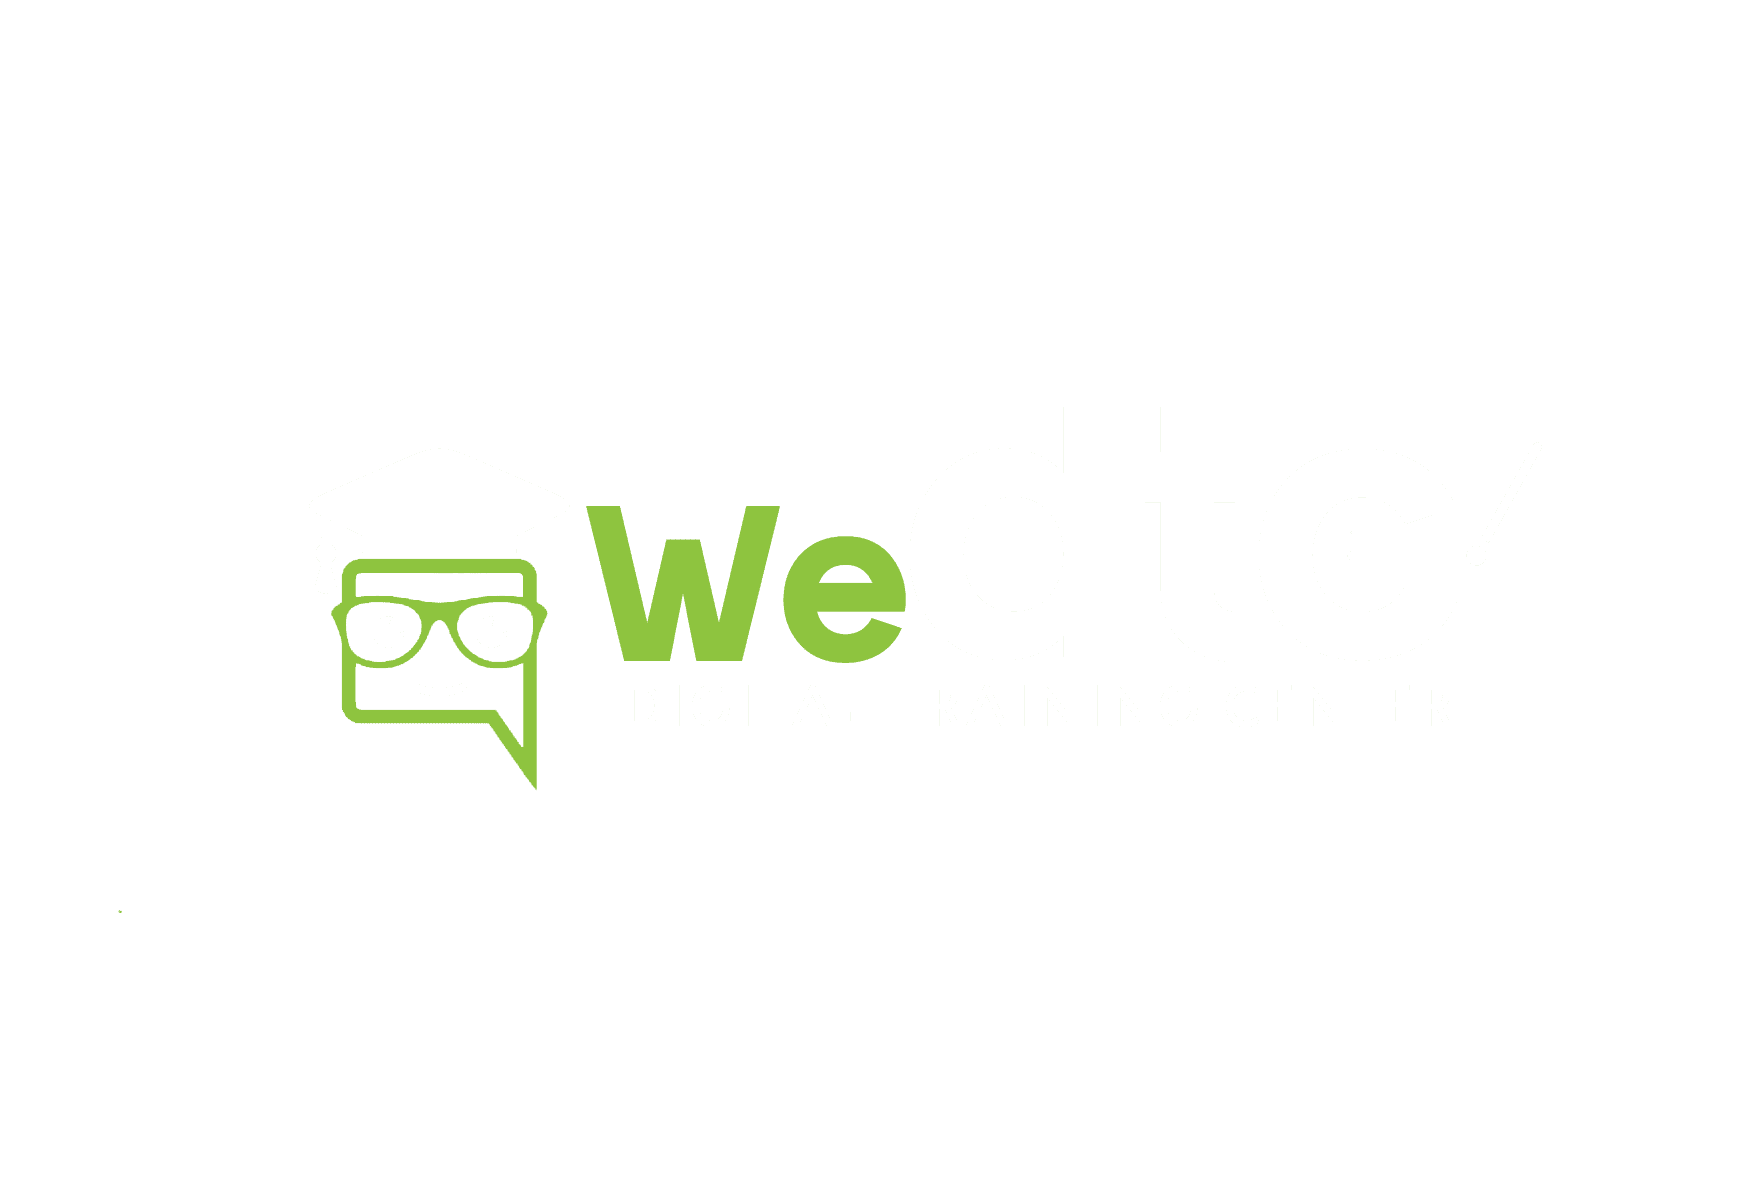 WeDTC - We Digital Training Center